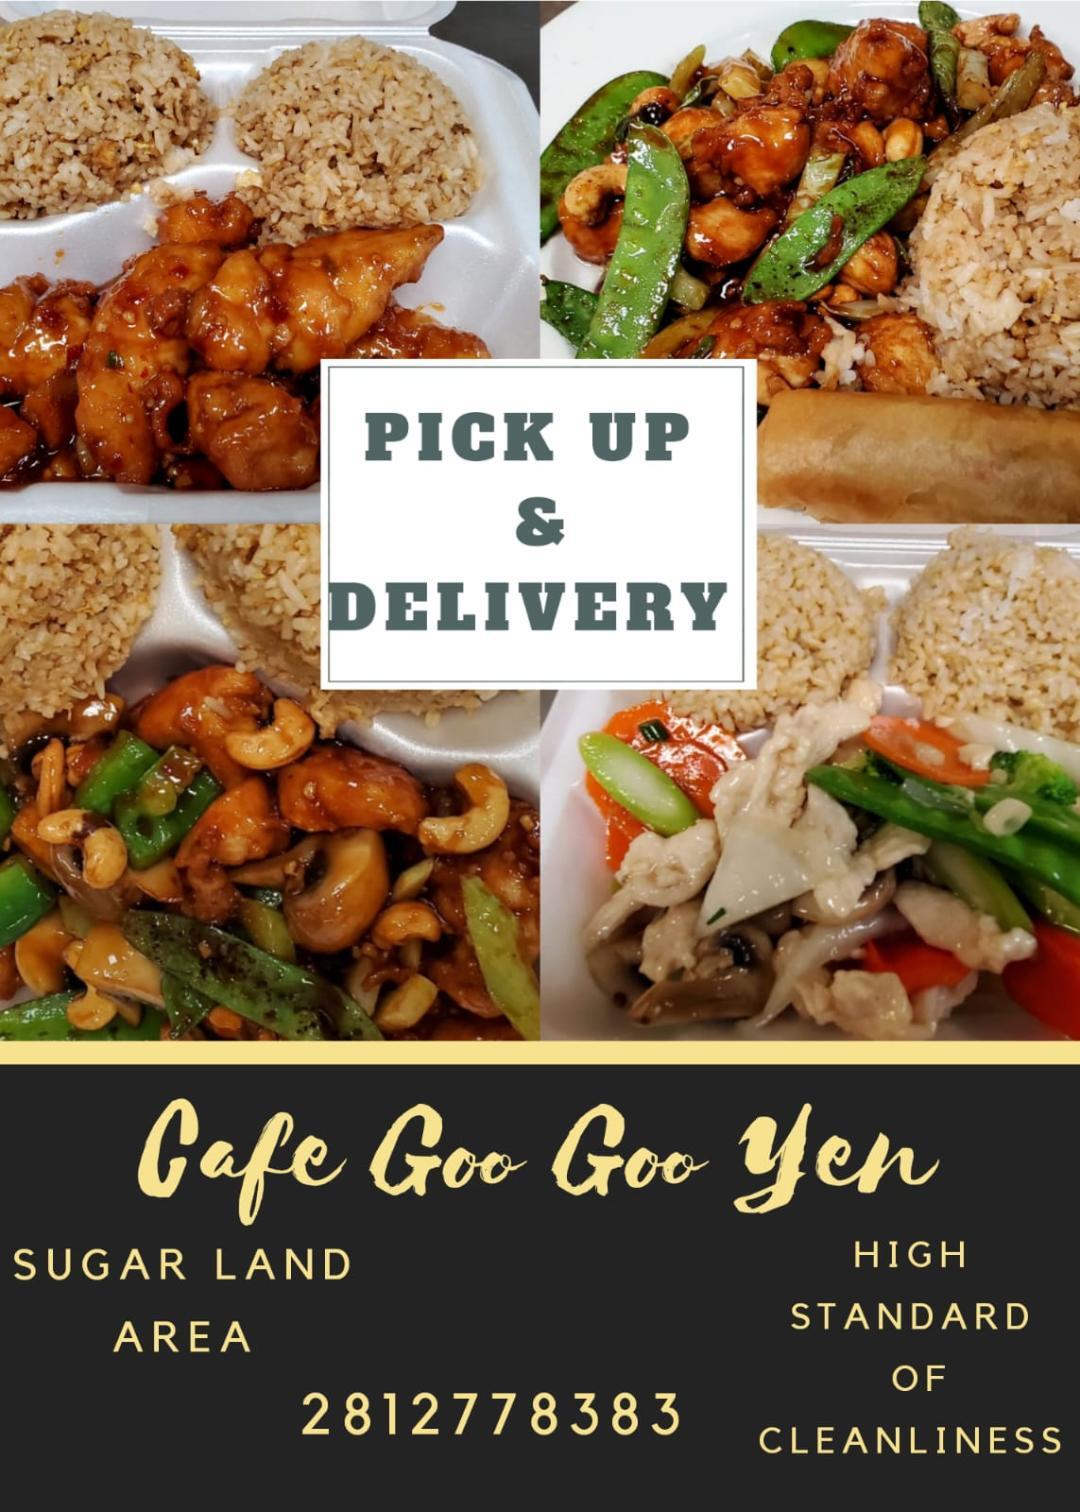 Cafe Goo Goo Yen - 226 Recommendations - Sugar Land, TX - Nextdoor